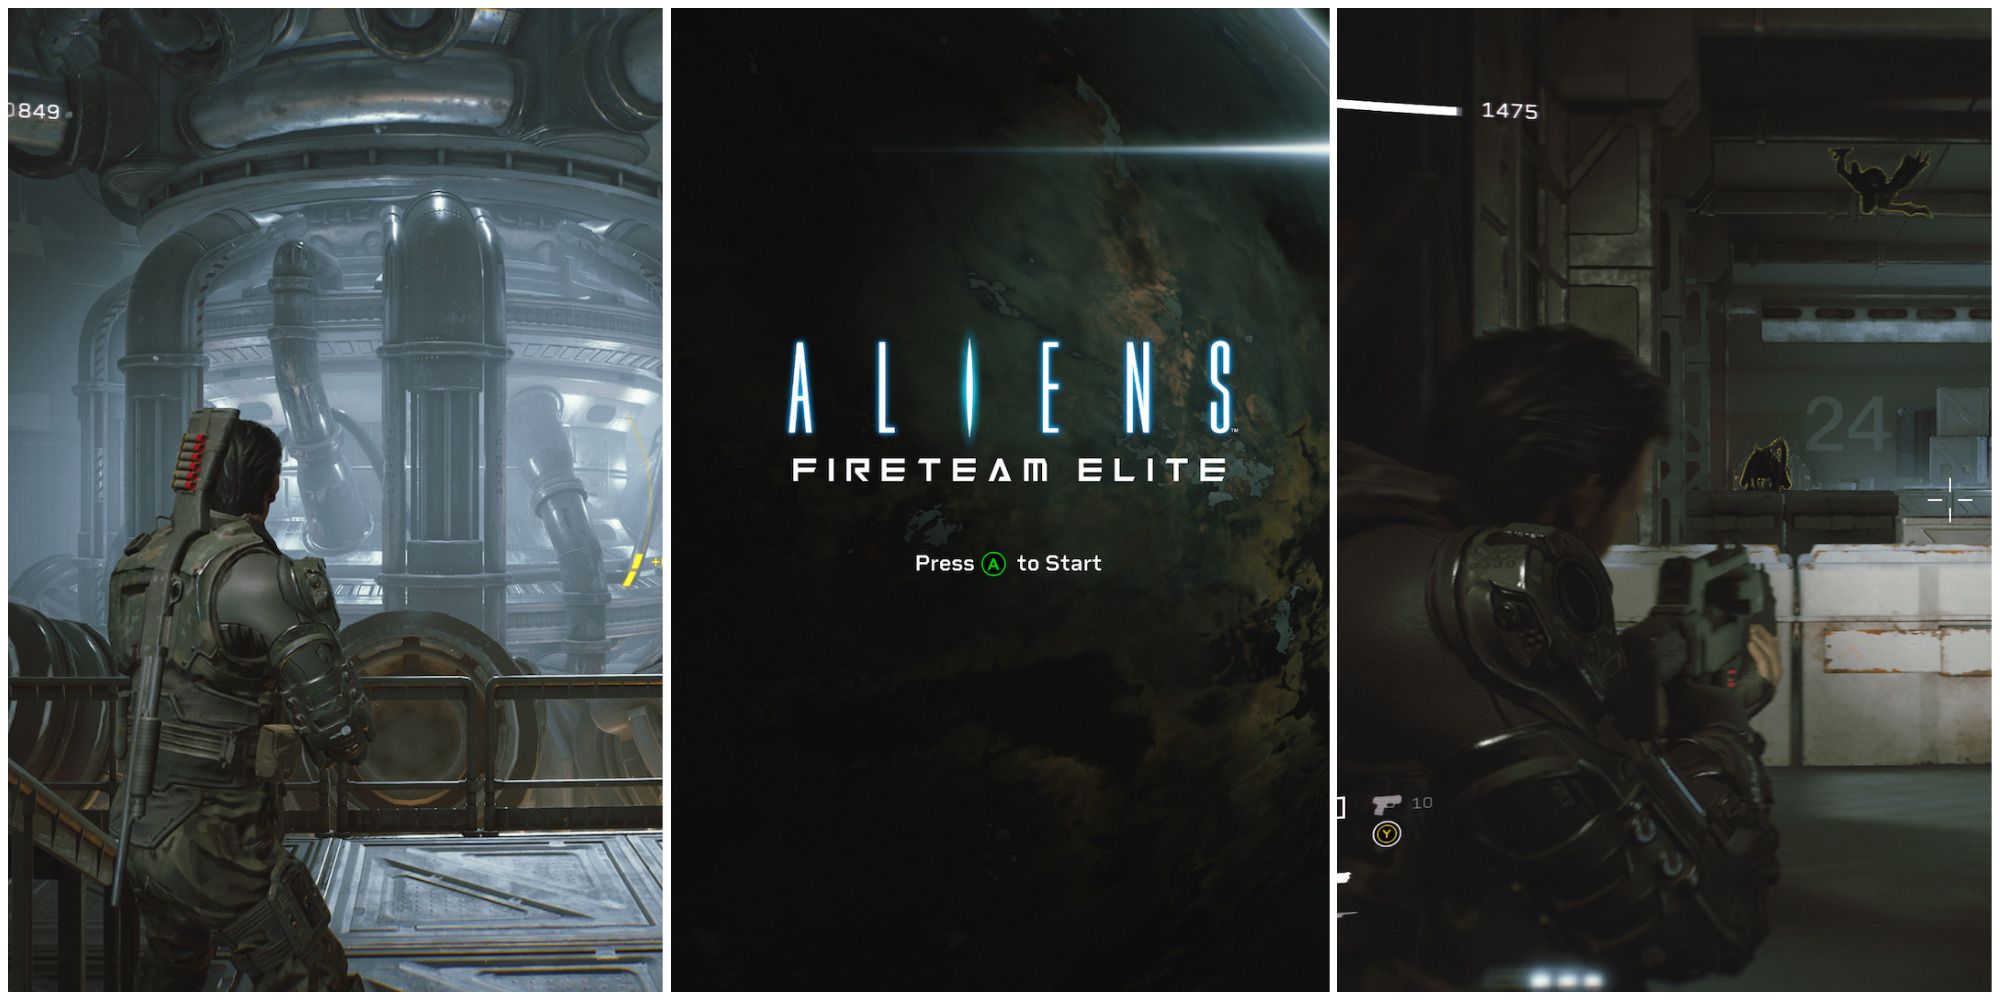 aliens fireteam elite exploring spaceship, main title screen, fighting aliens featured